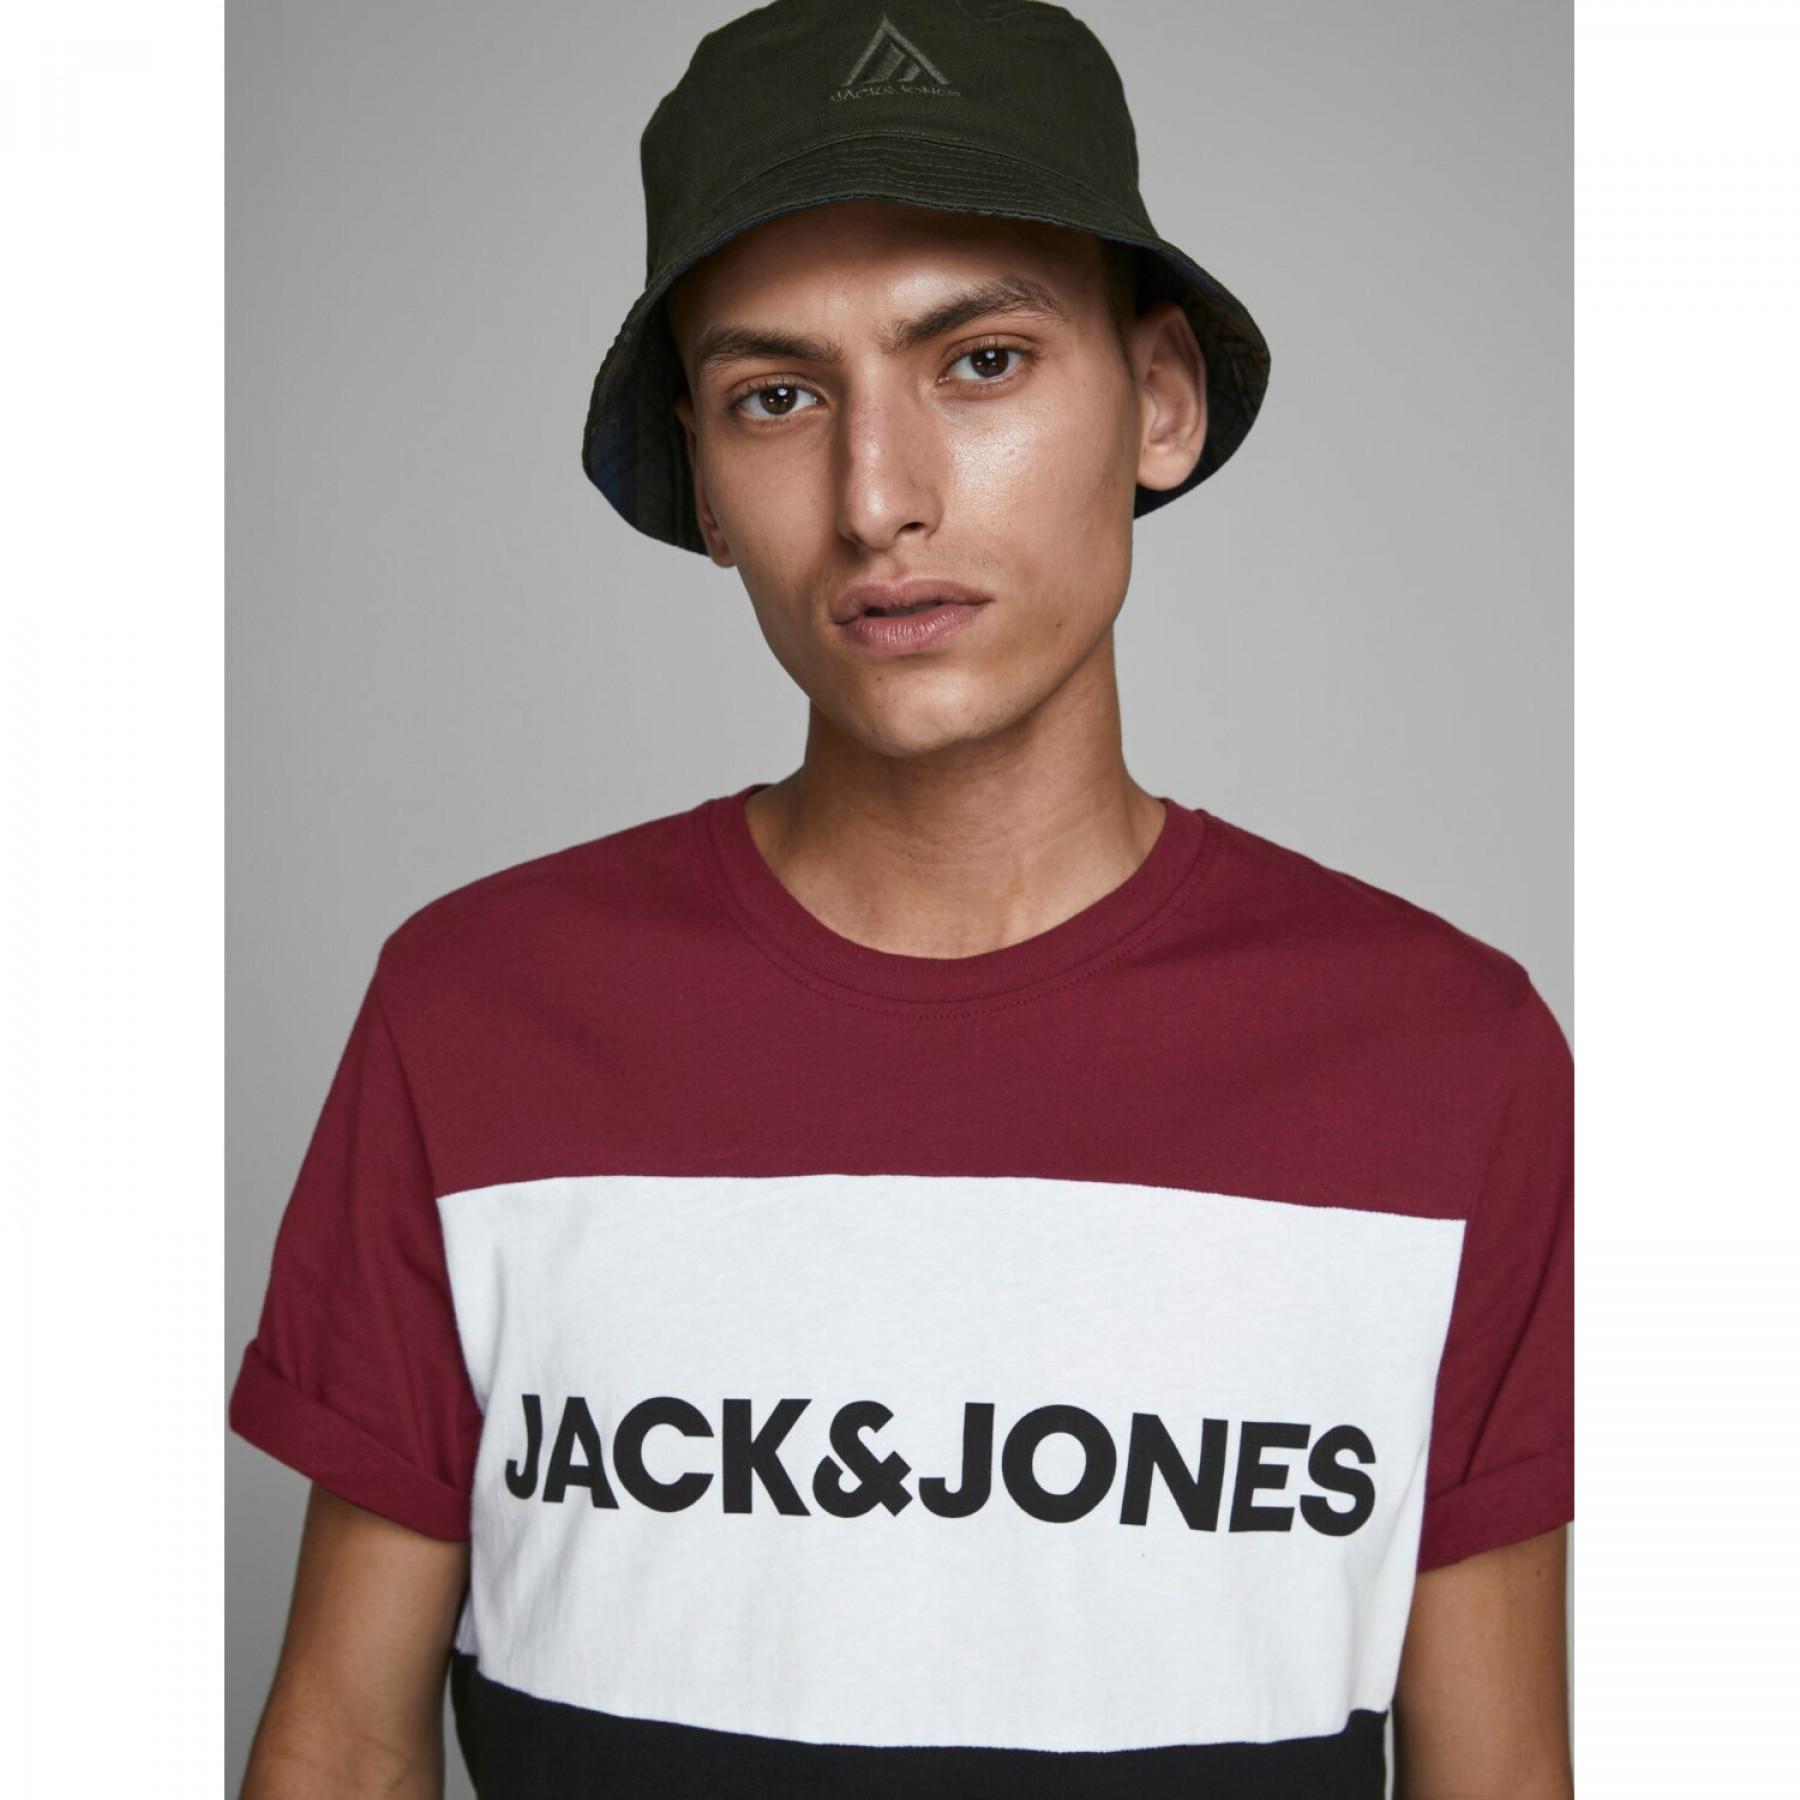 Camiseta con logo blocking de Jack & Jones